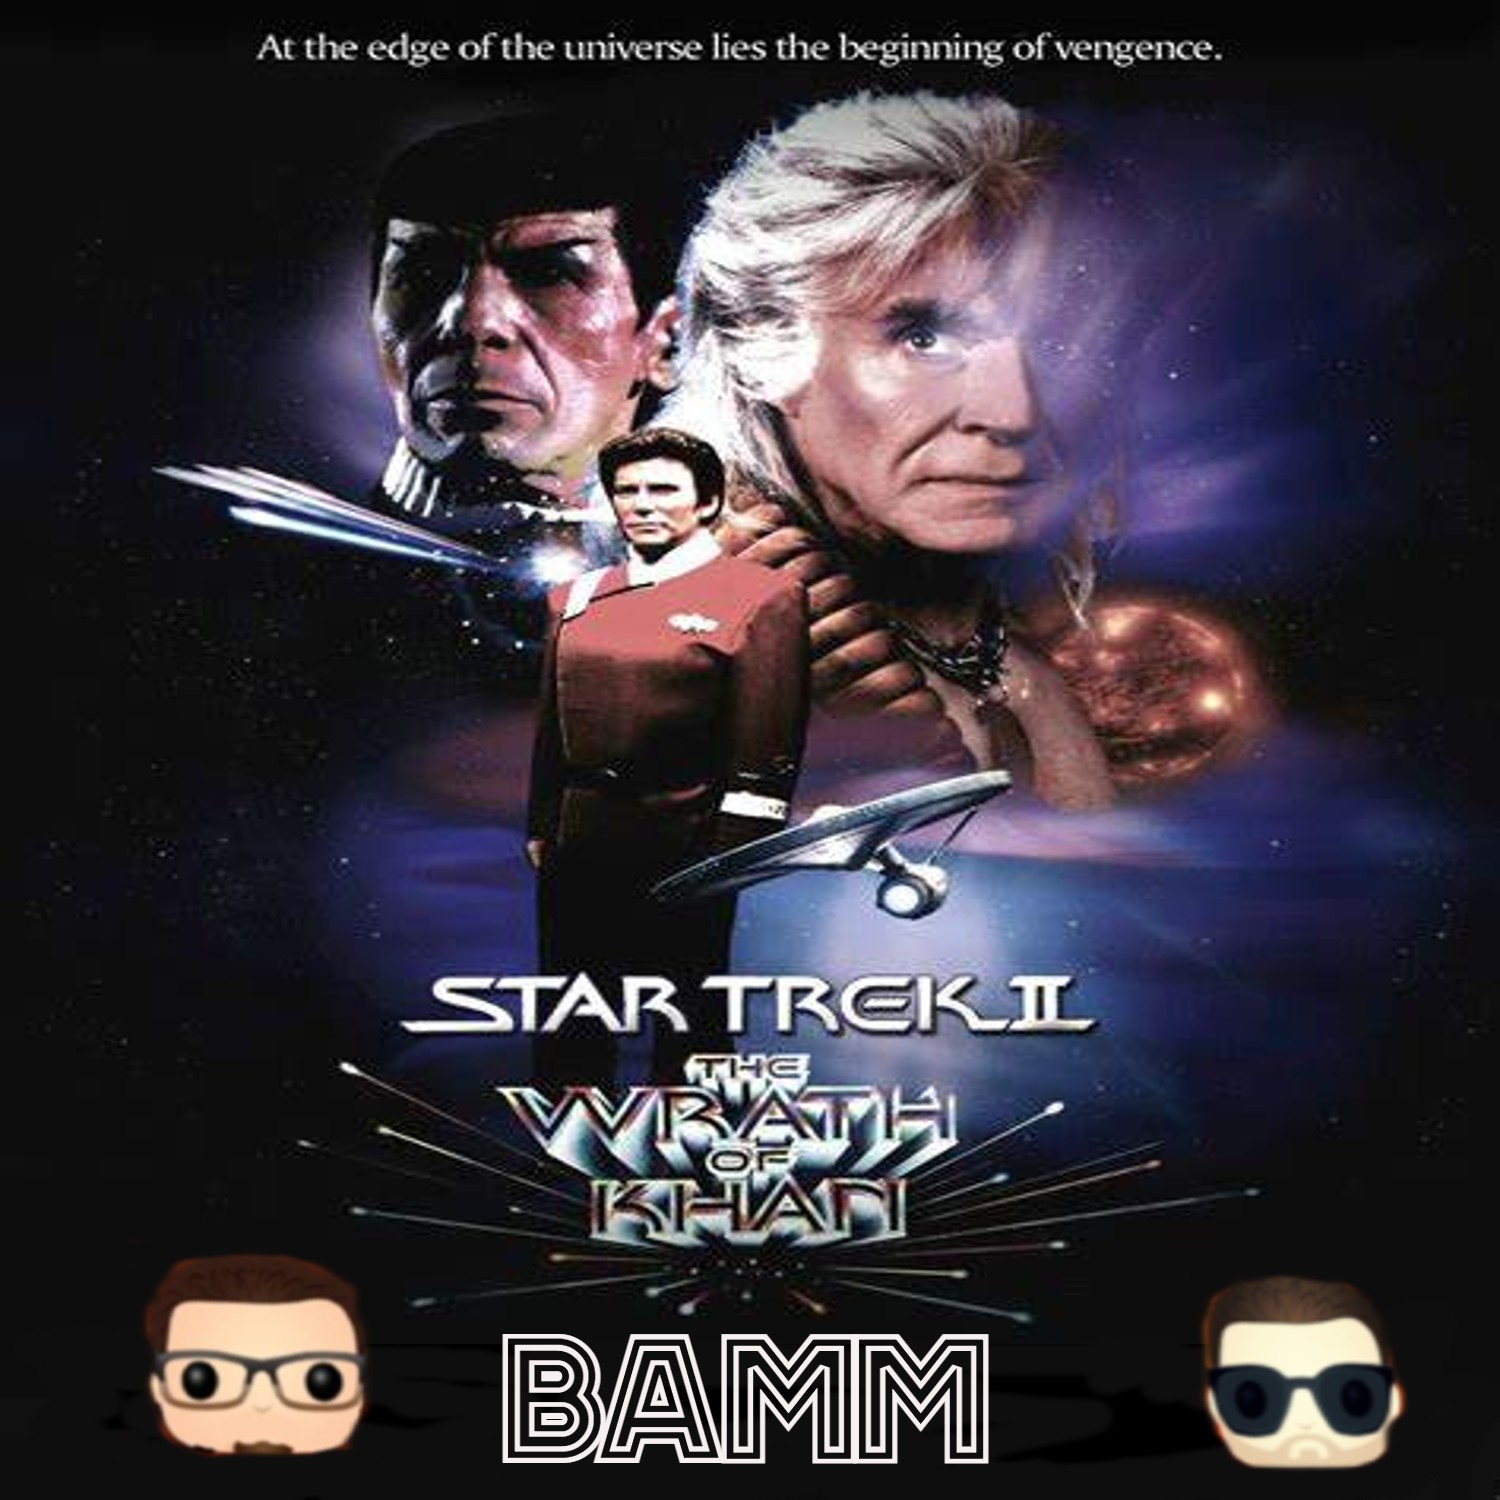 Star Trek: The Wraith of Khan